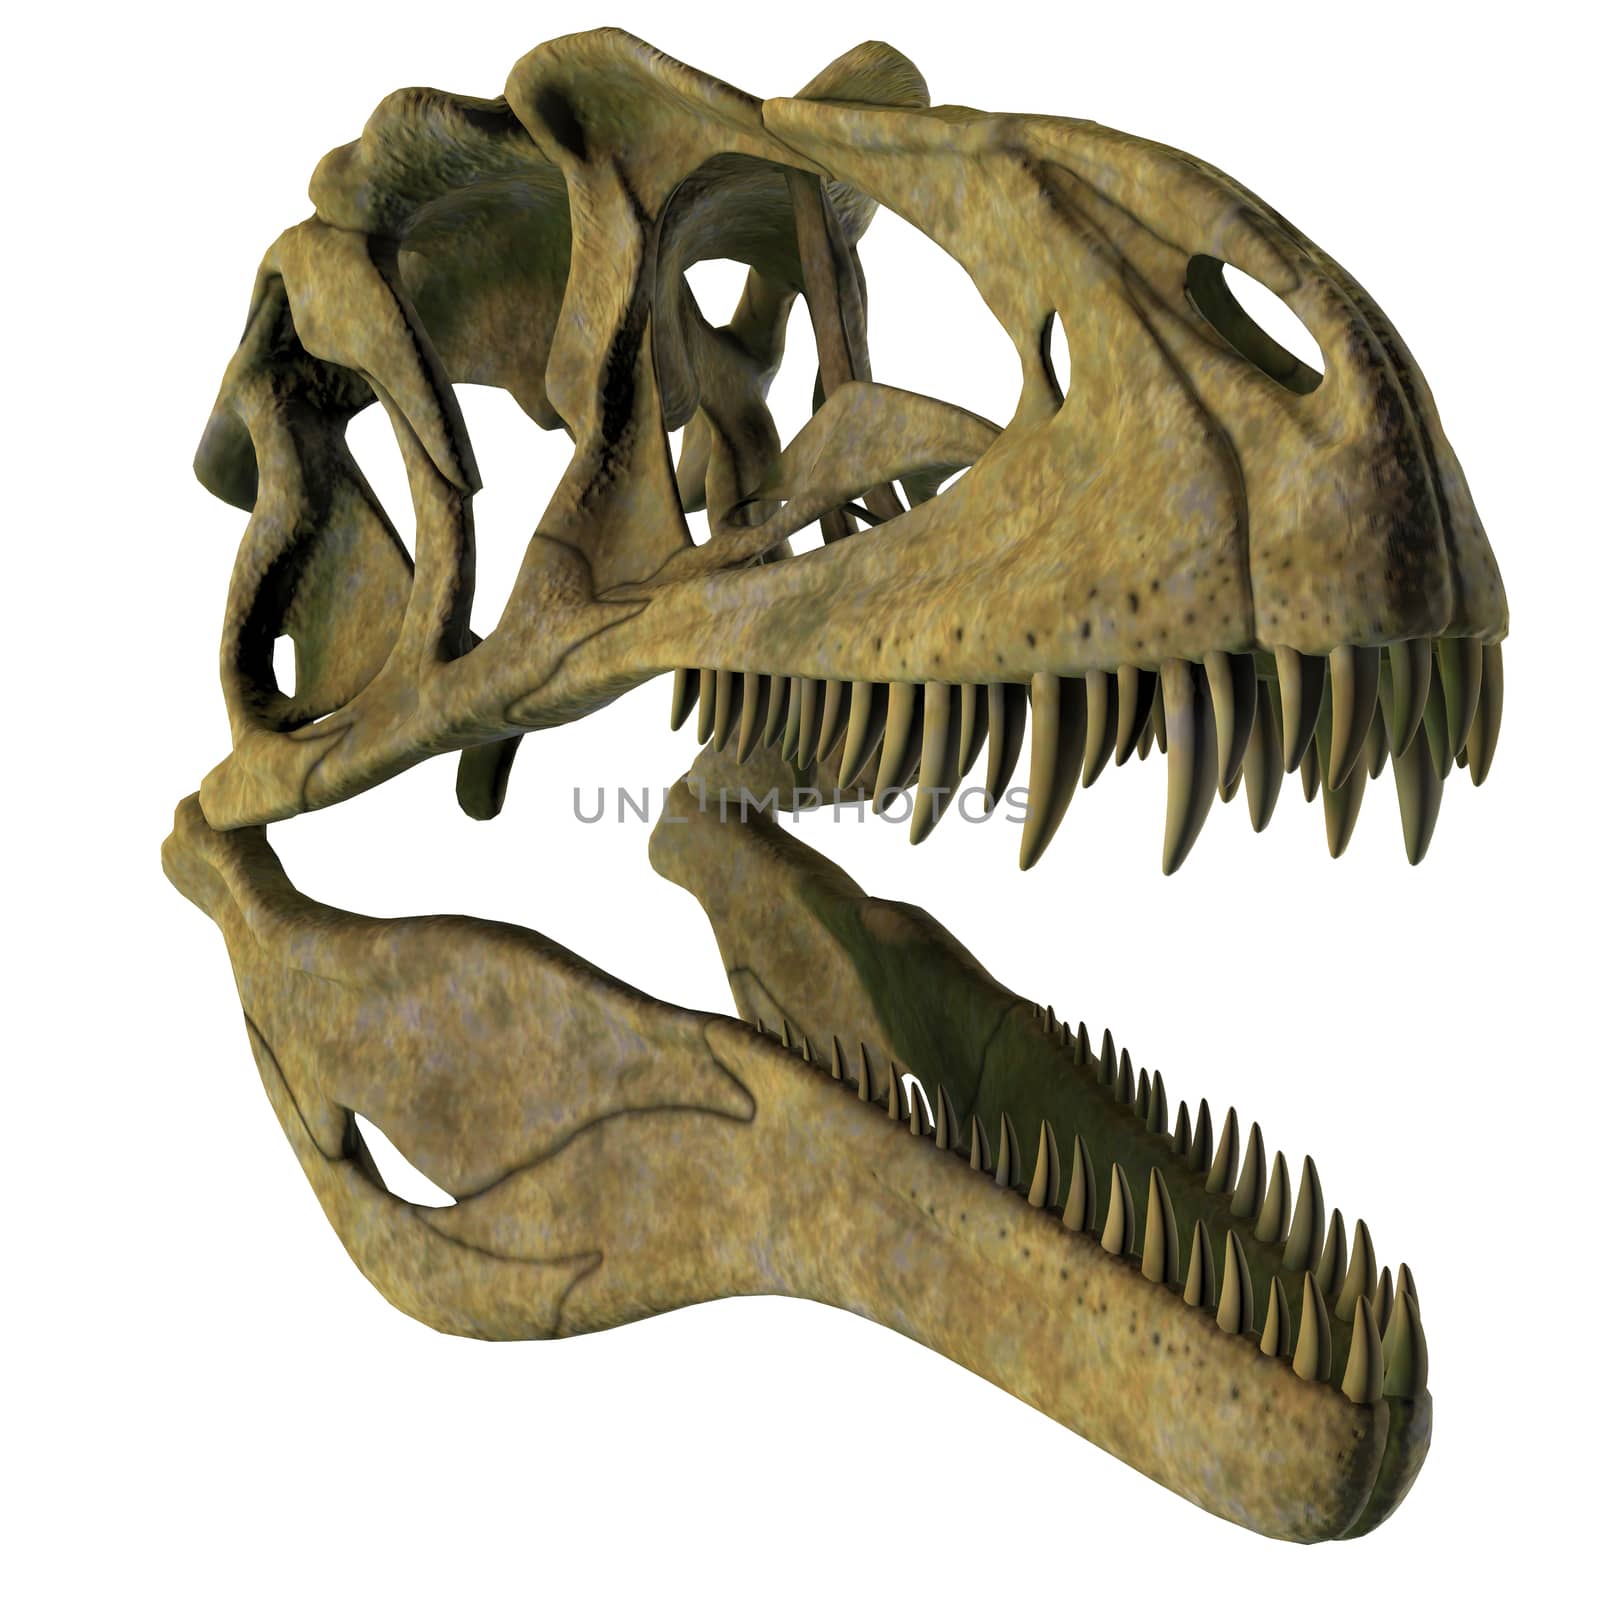 Acrocanthosaurus Dinosaur Skull by Catmando